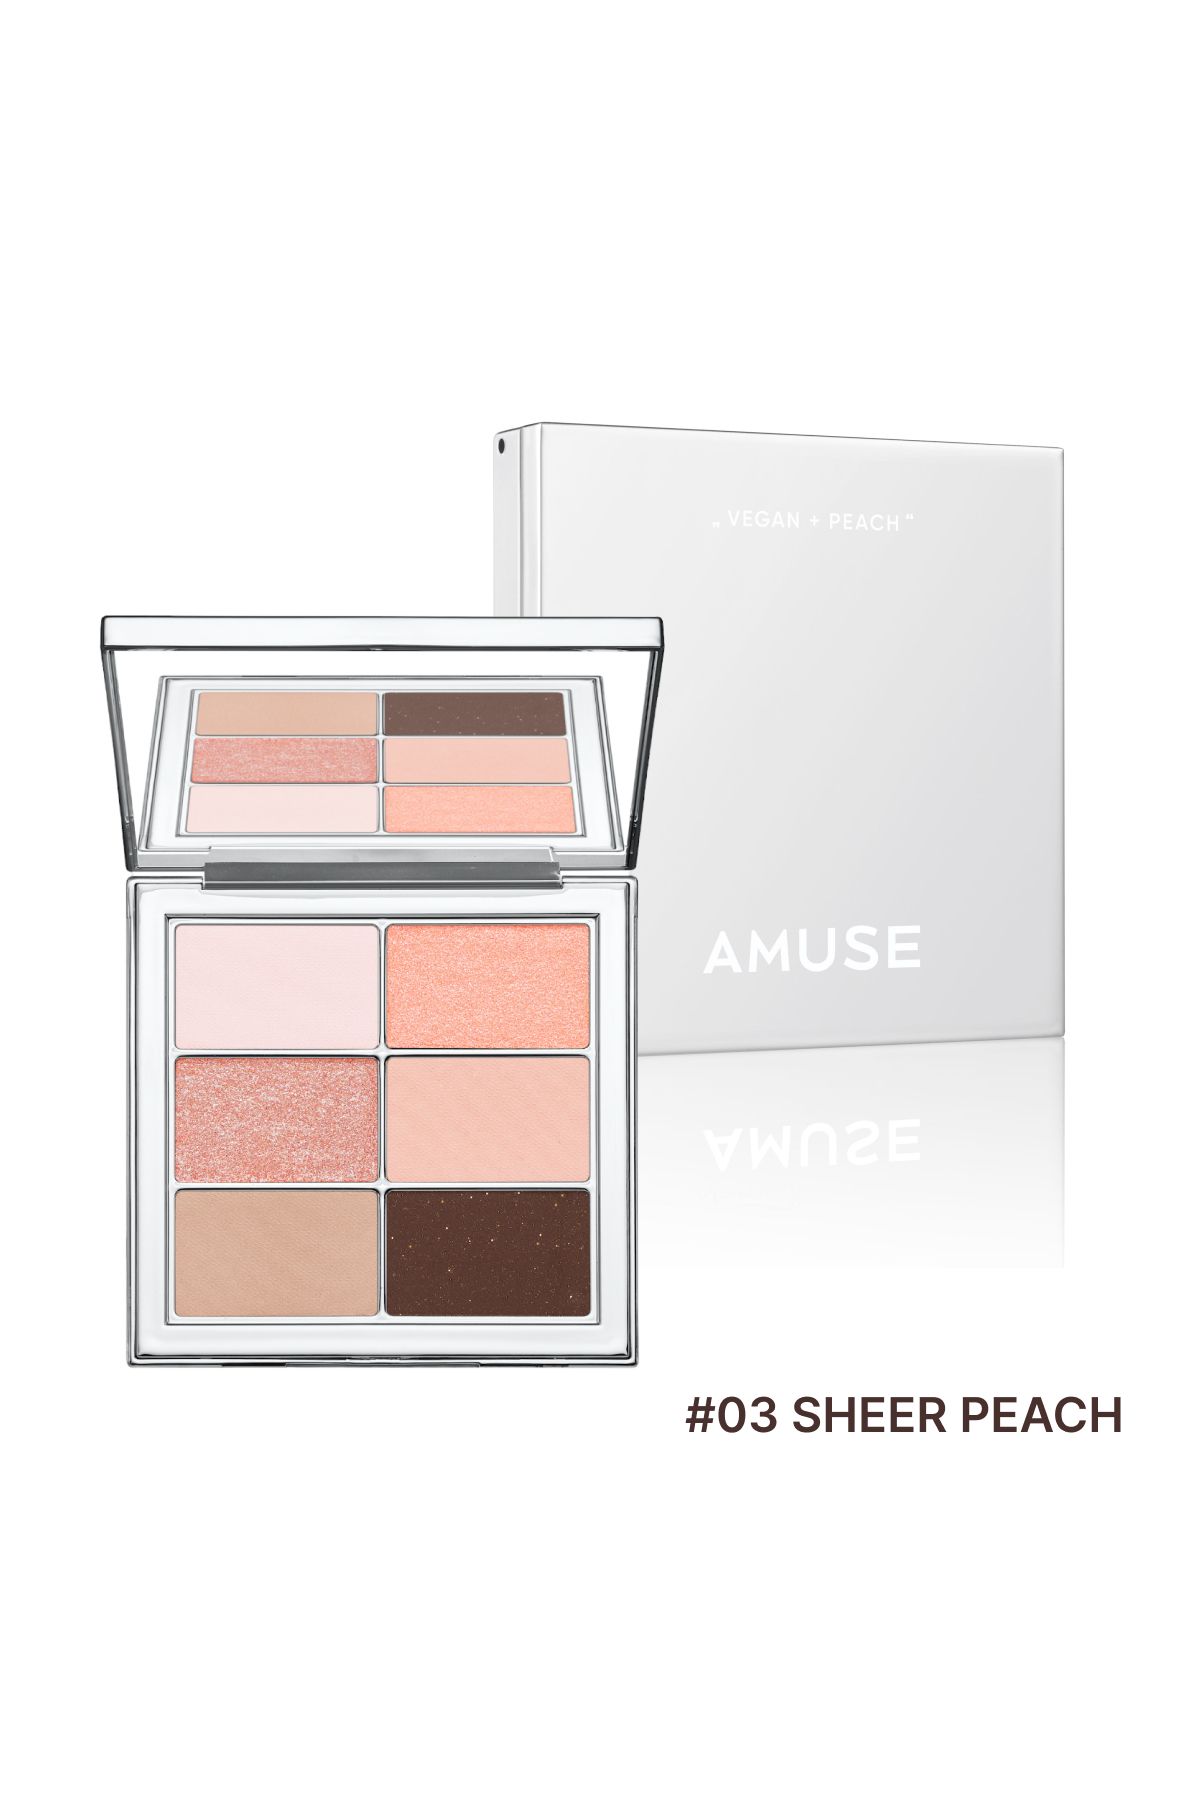 Amuse Eye Vegan Sheer Palette - Işıltı Katan Kolay Uygulanabilir Far Paleti 1.6g X 6g #03 Sheer Peach